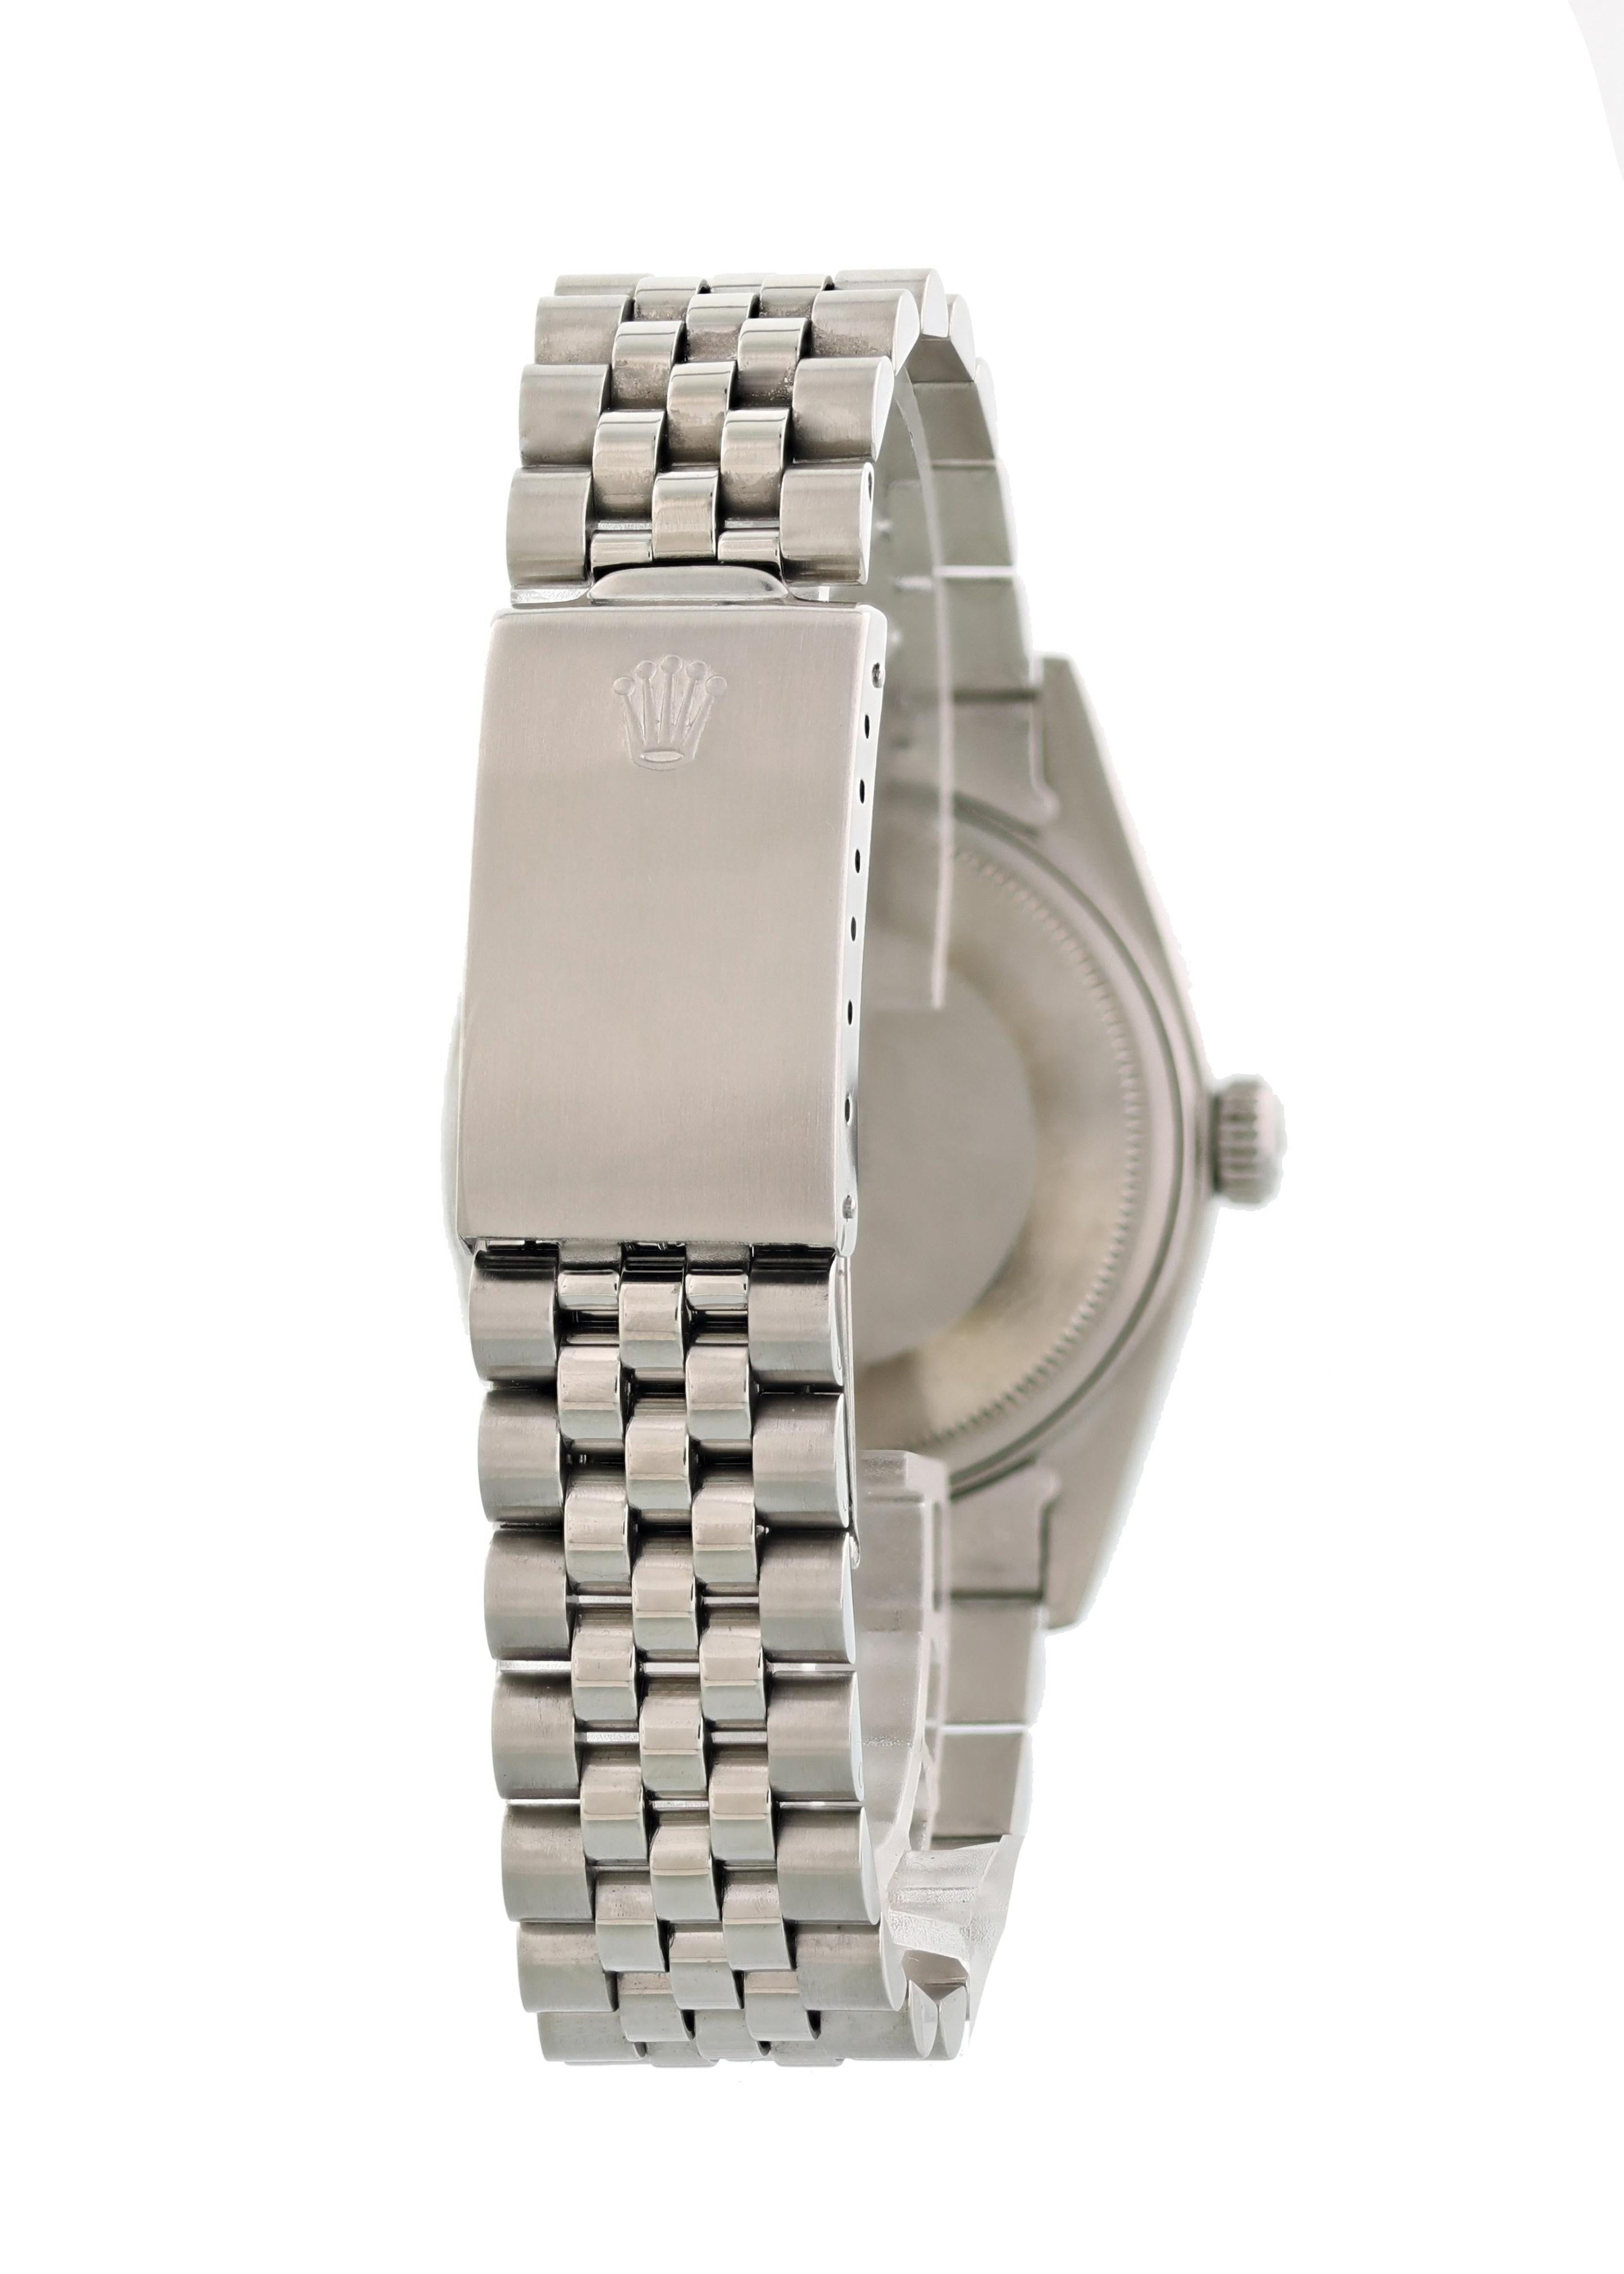 Rolex Datejust 16014 Men's Watch For Sale 1